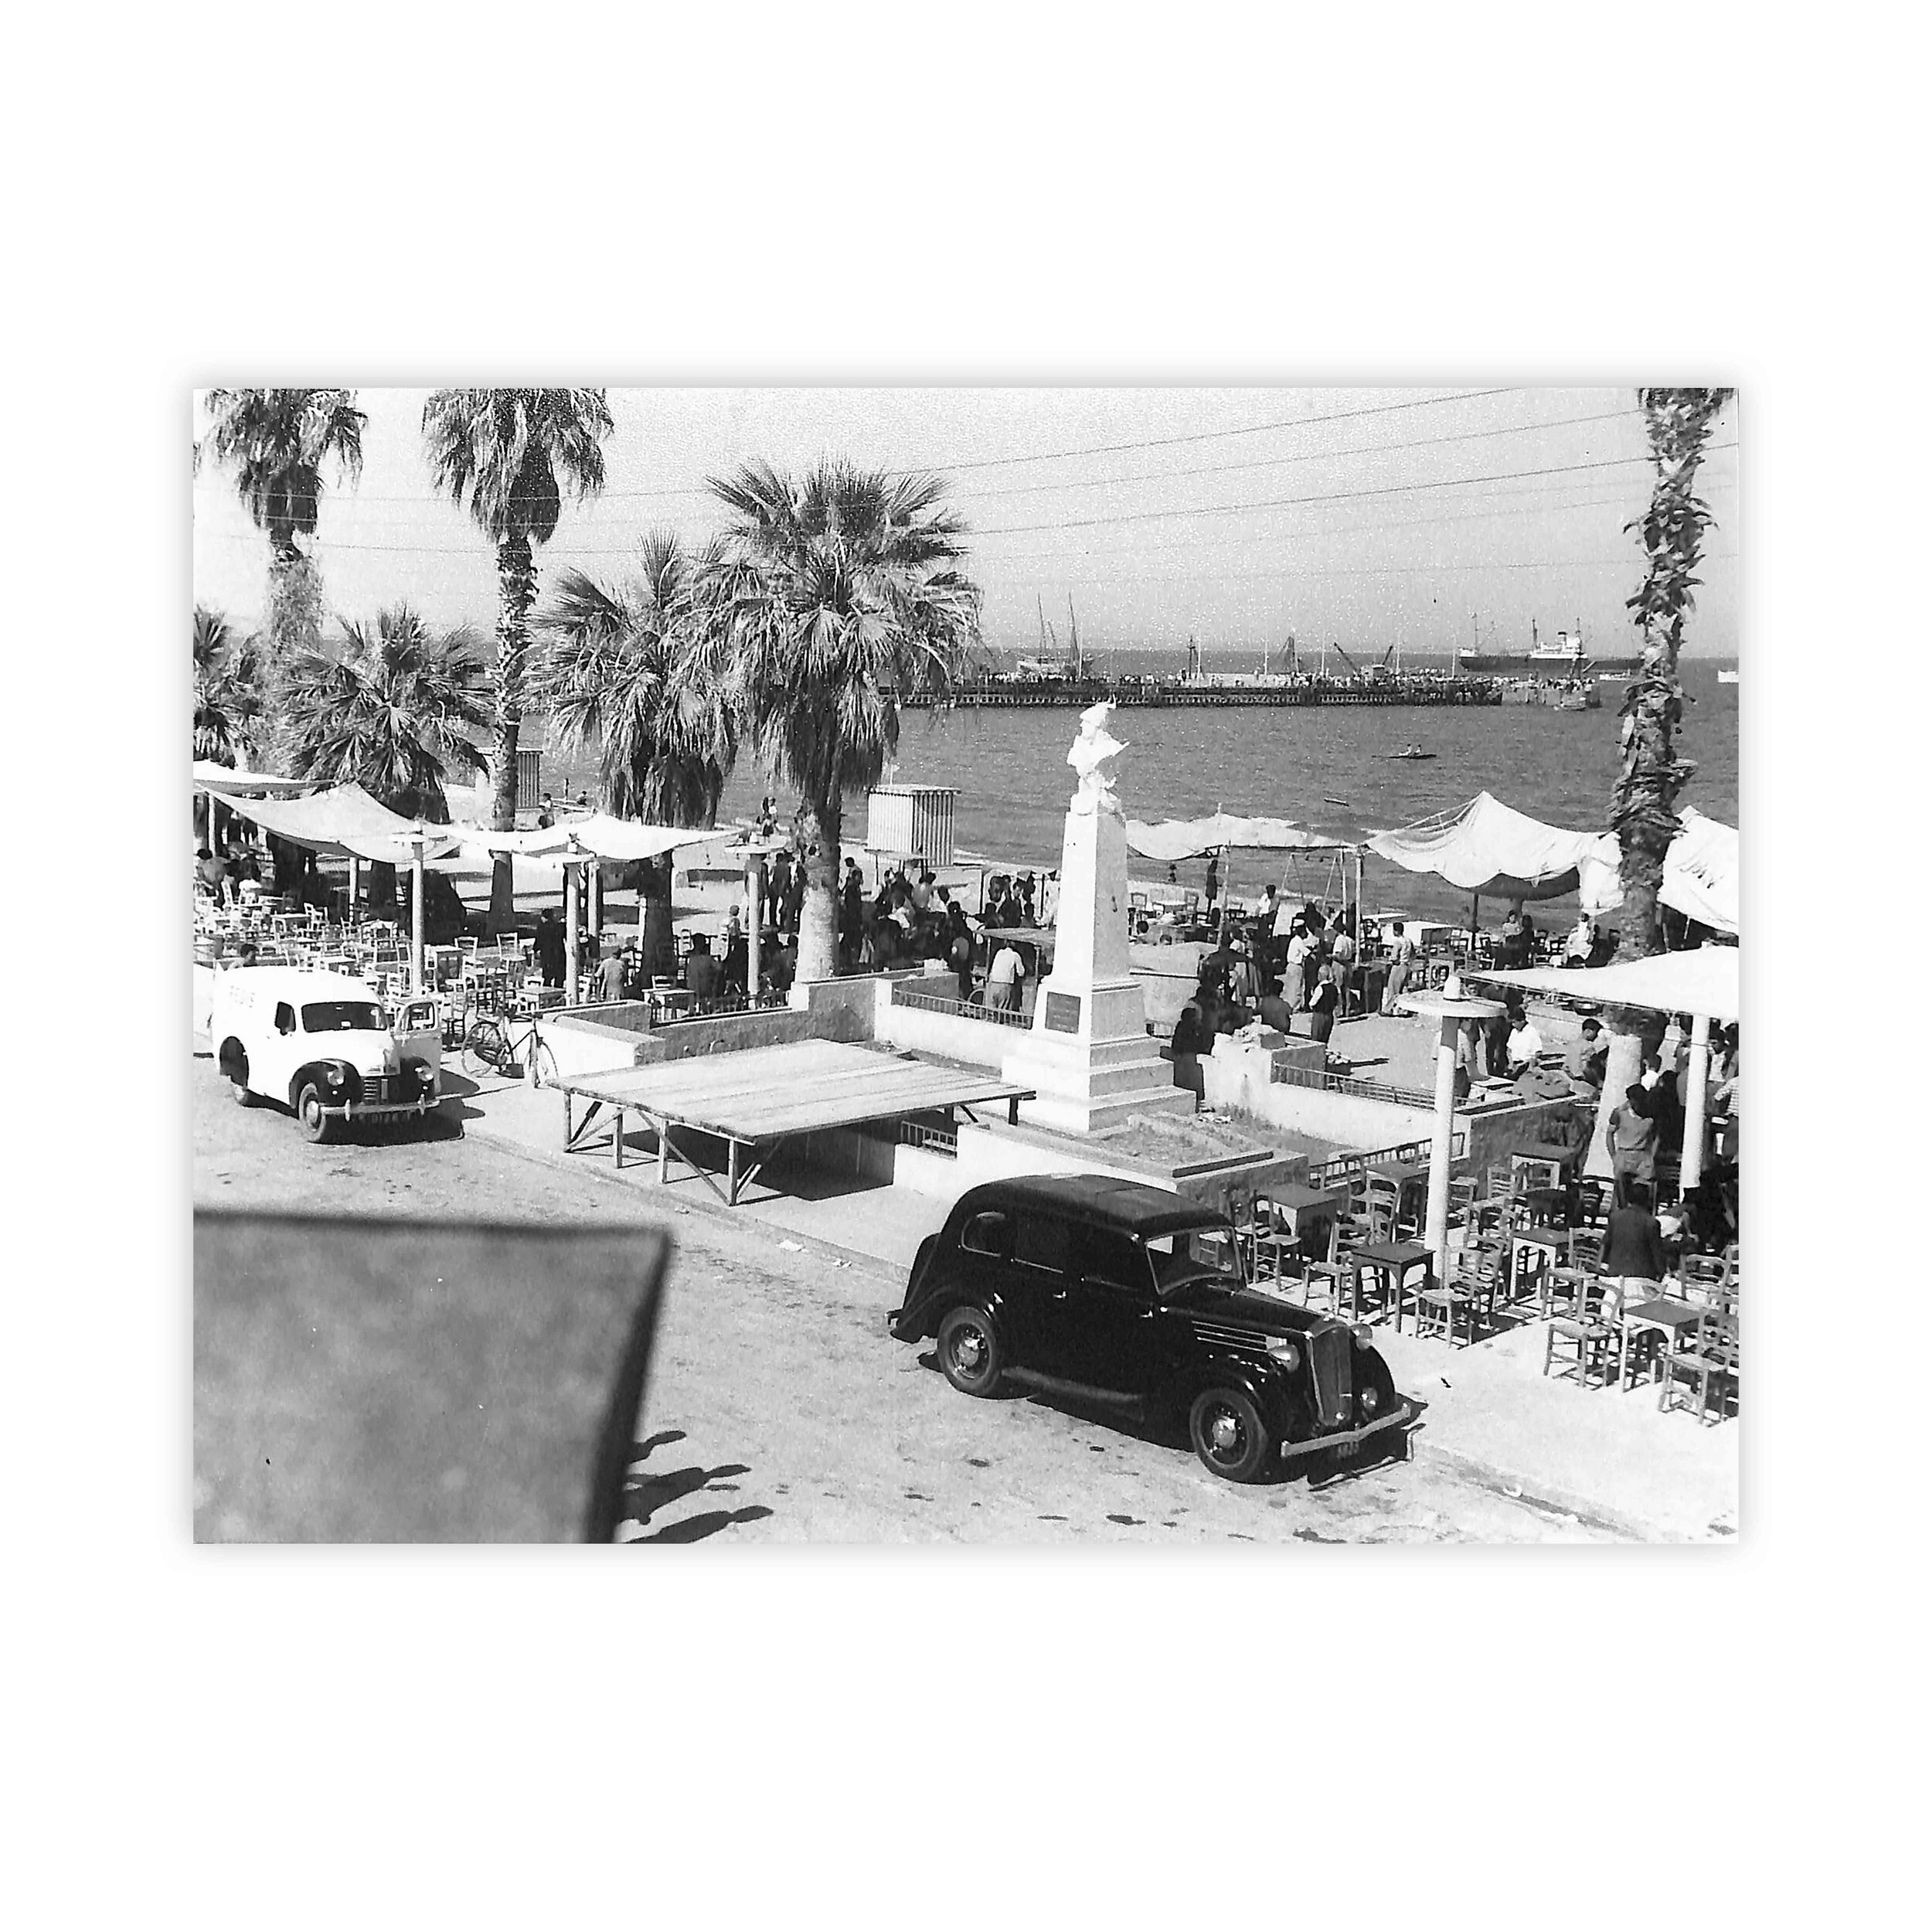  Kataklismos - Flood Festival, Photograph, Pier - Larnaca, 1950s 